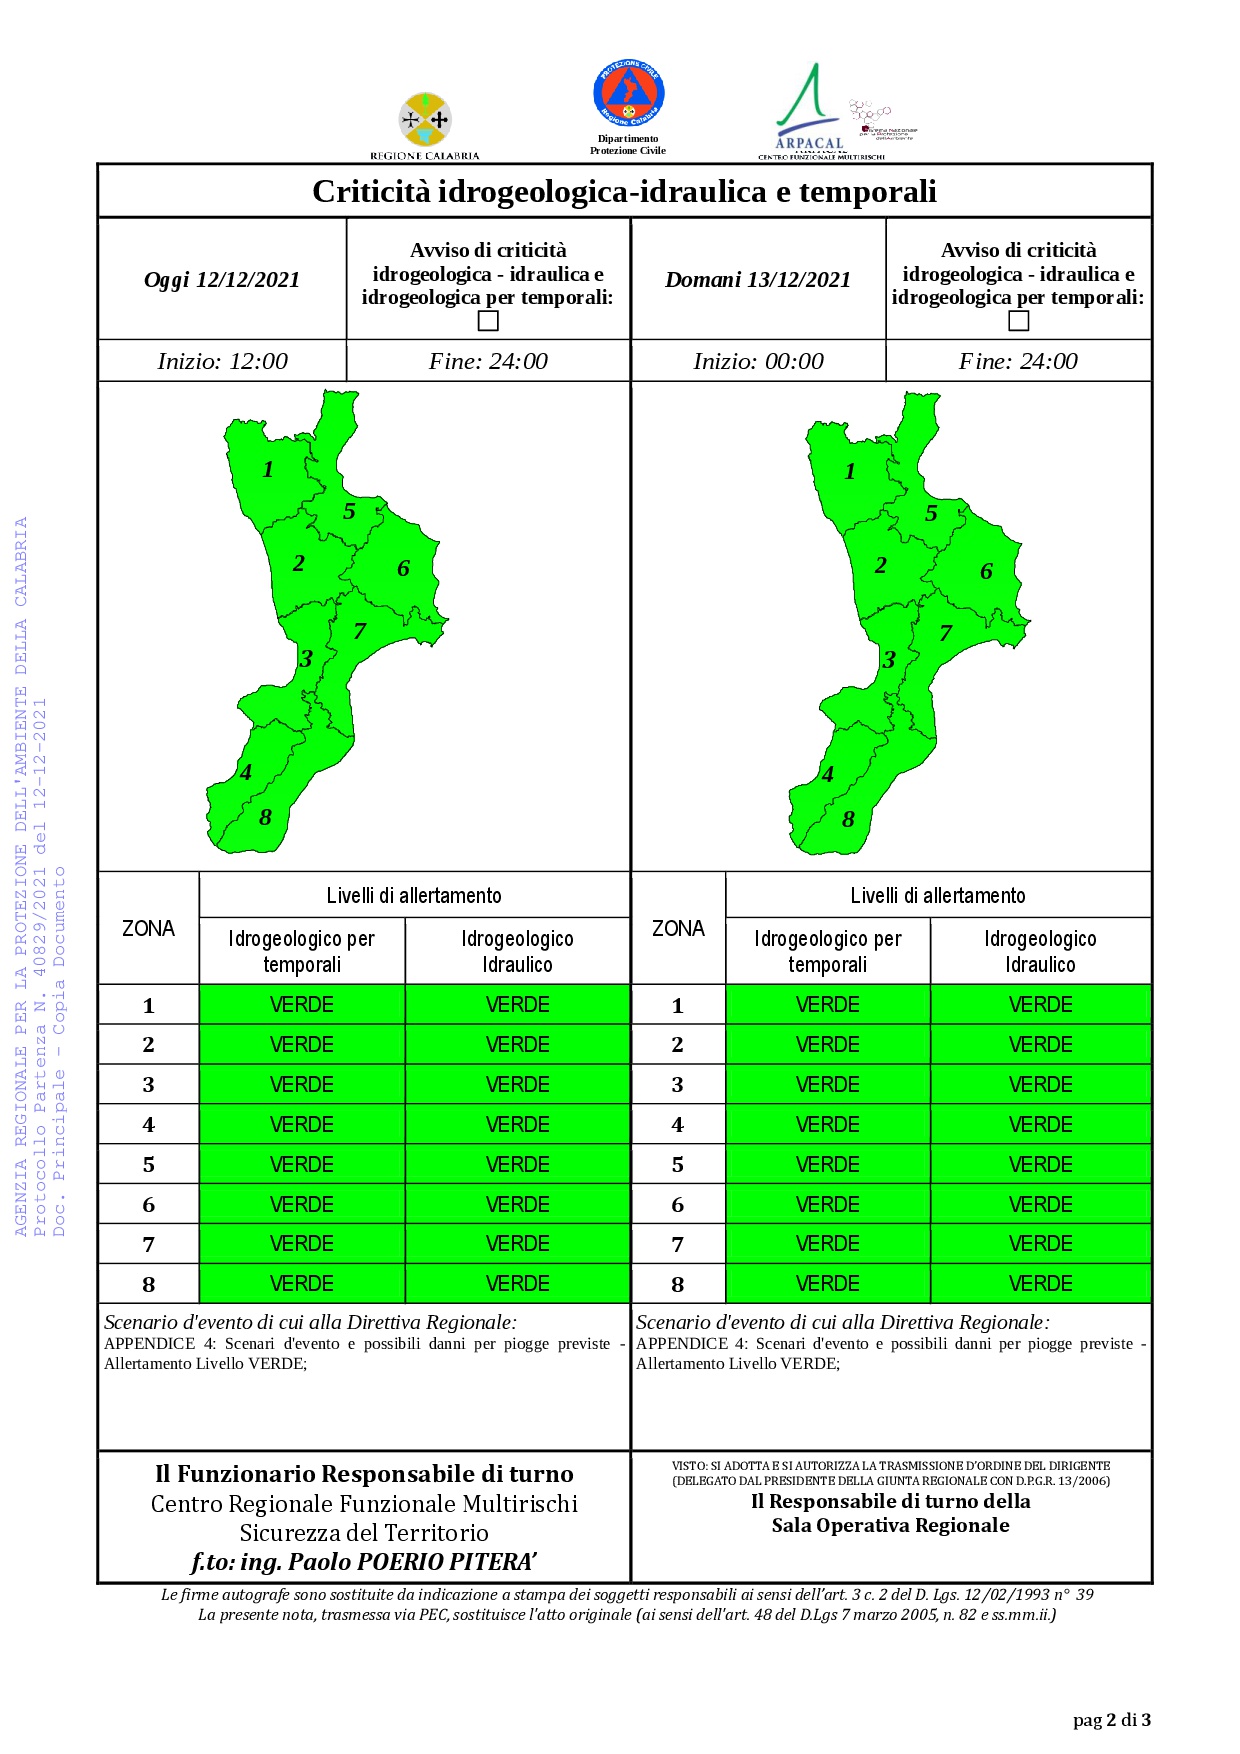 Criticità idrogeologica-idraulica e temporali in Calabria 12-12-2021